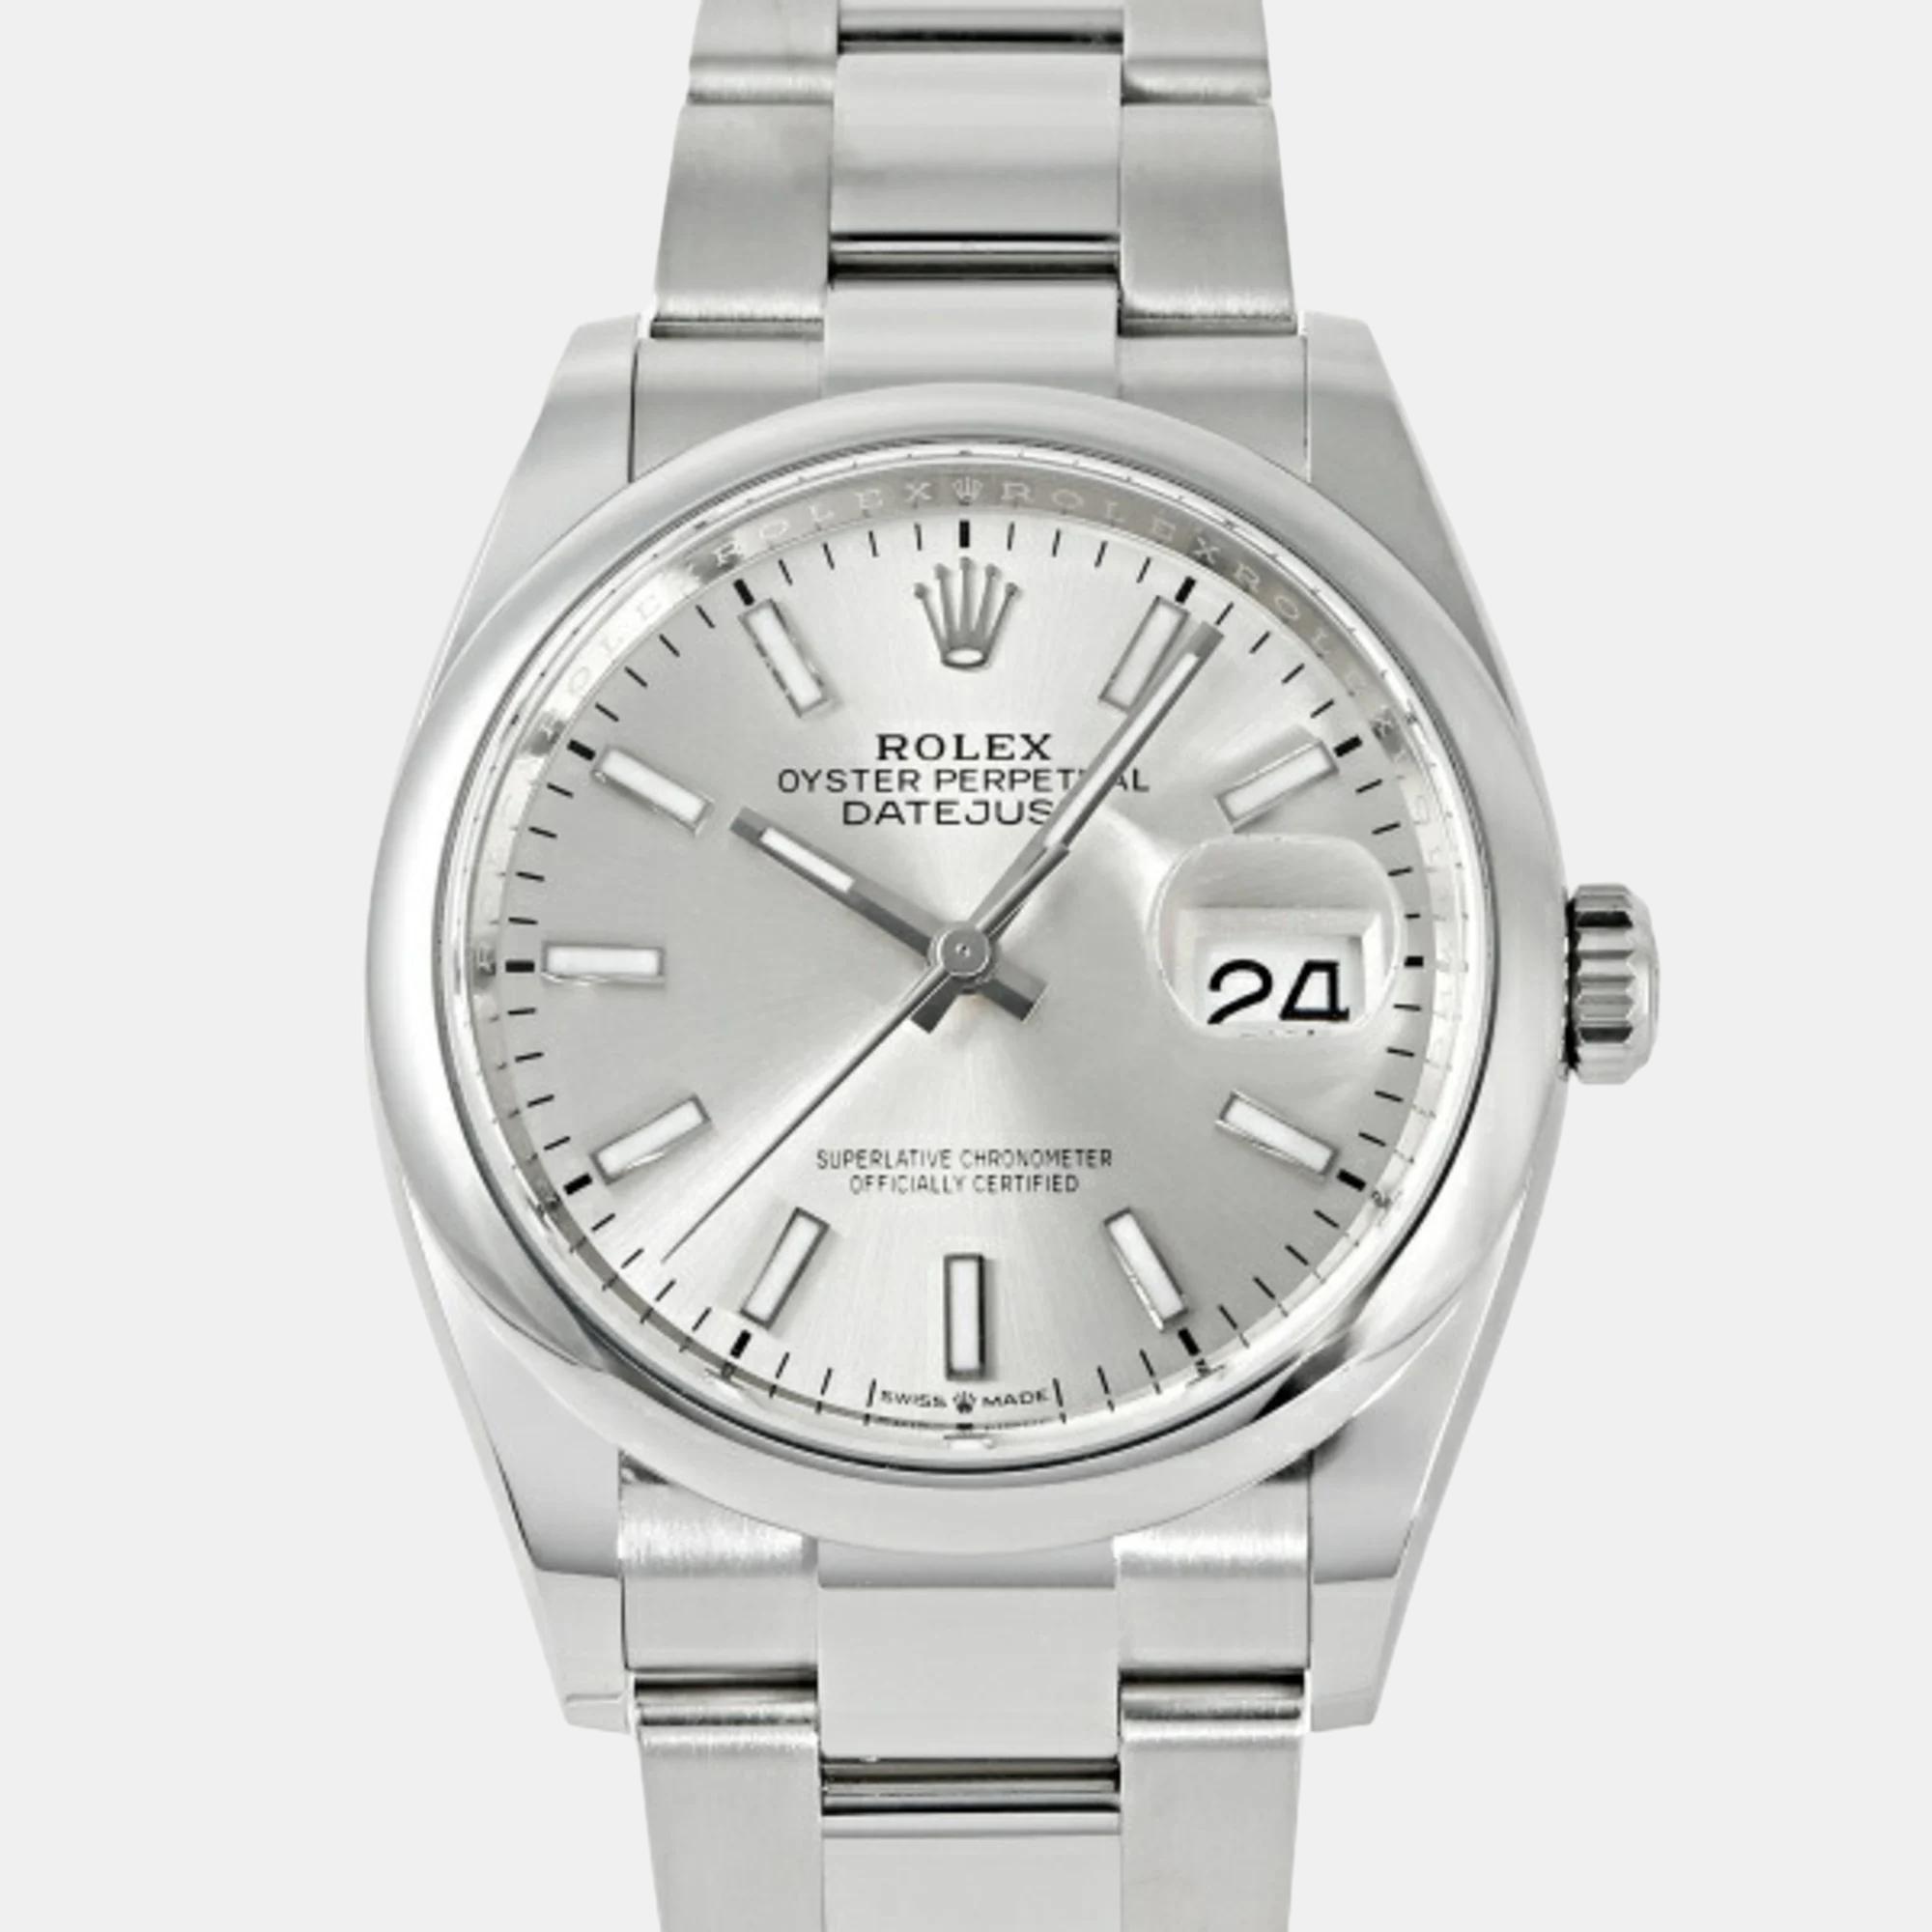 Rolex silver stainless steel datejust 126200 men's watch 36mm